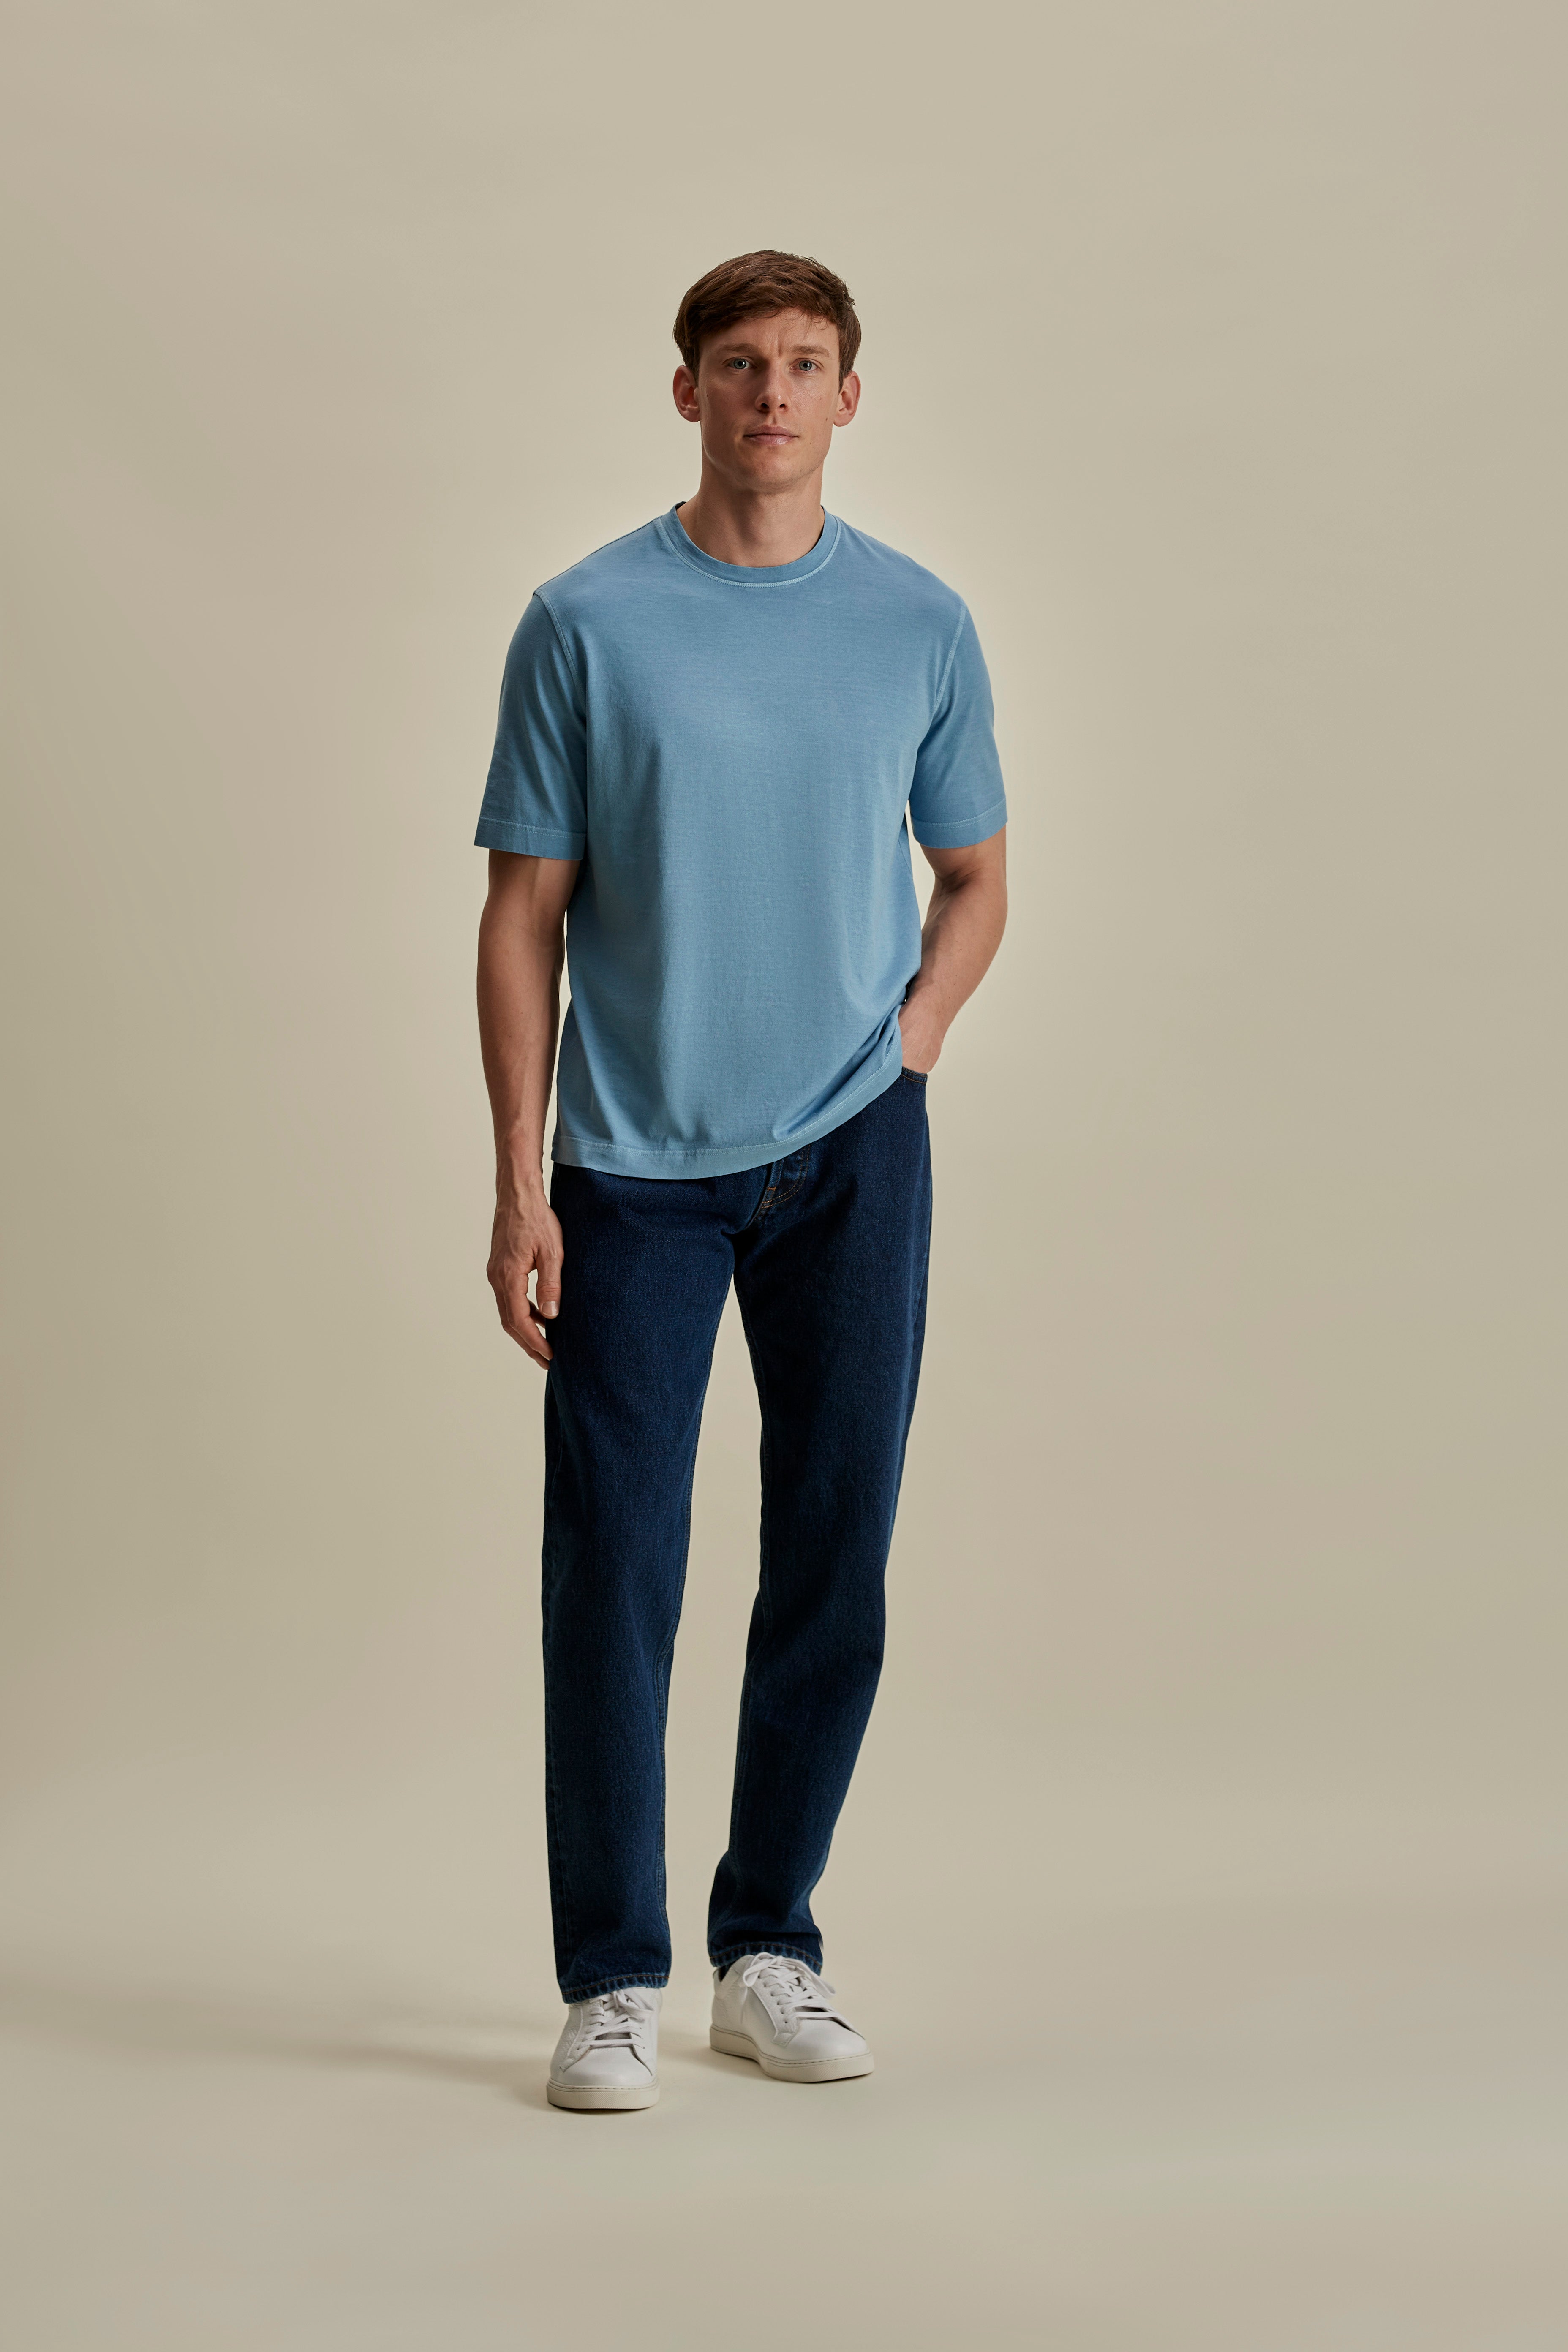 Lightweight Cotton Classic T-Shirt Powder Blue Full Length Model Image